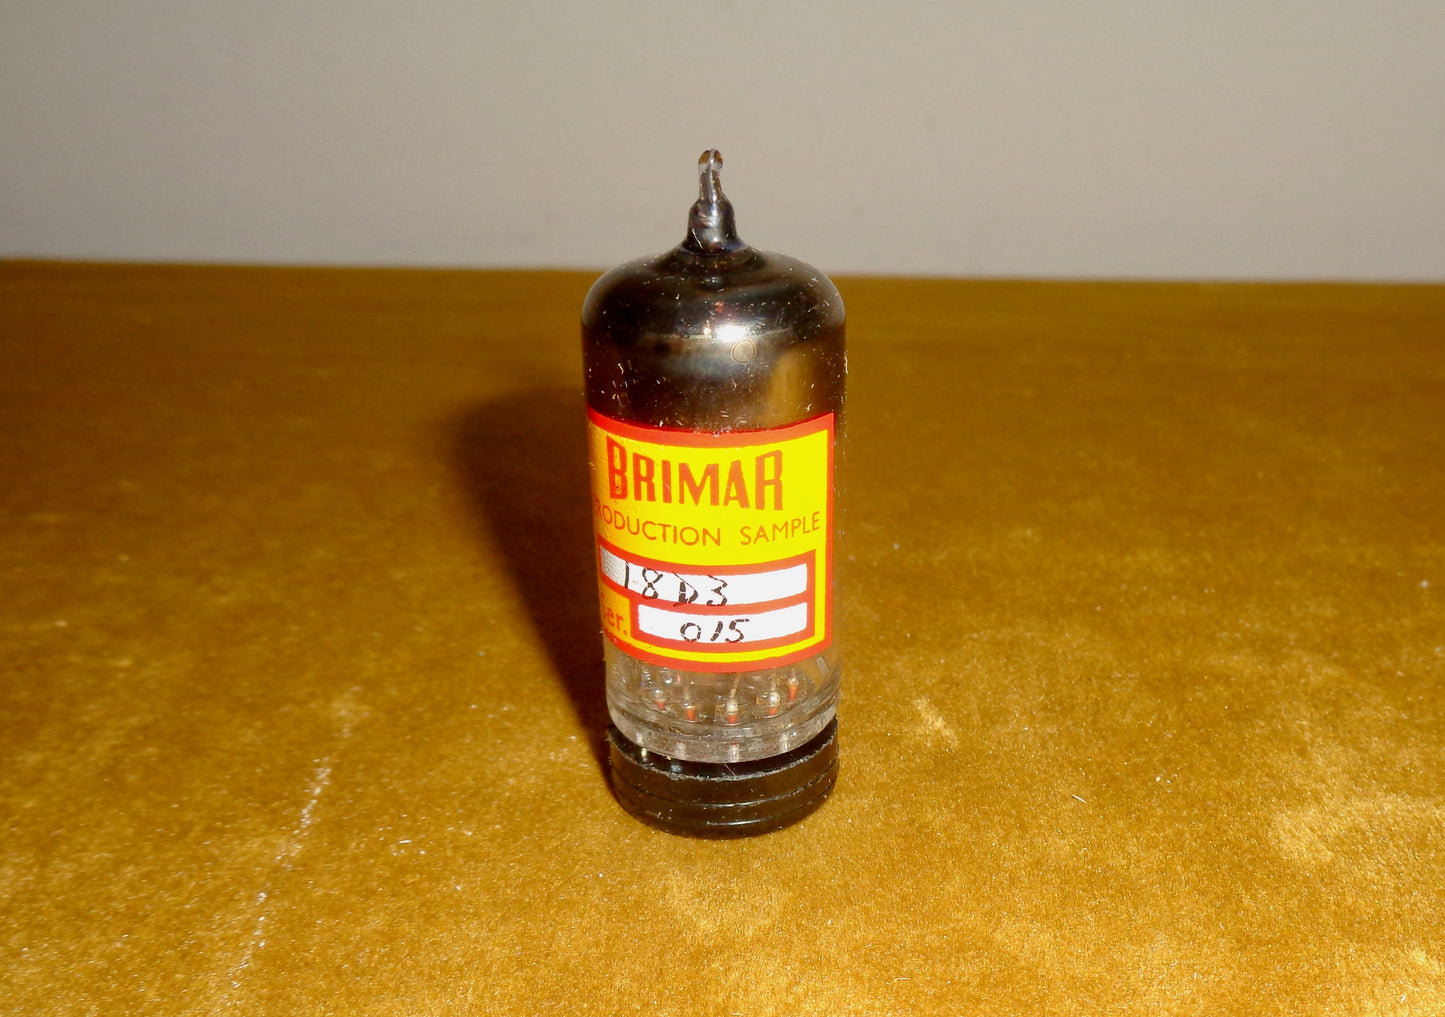 Vintage Brimar 18D3 Production Sample Thermionic Valve Serial Number 015